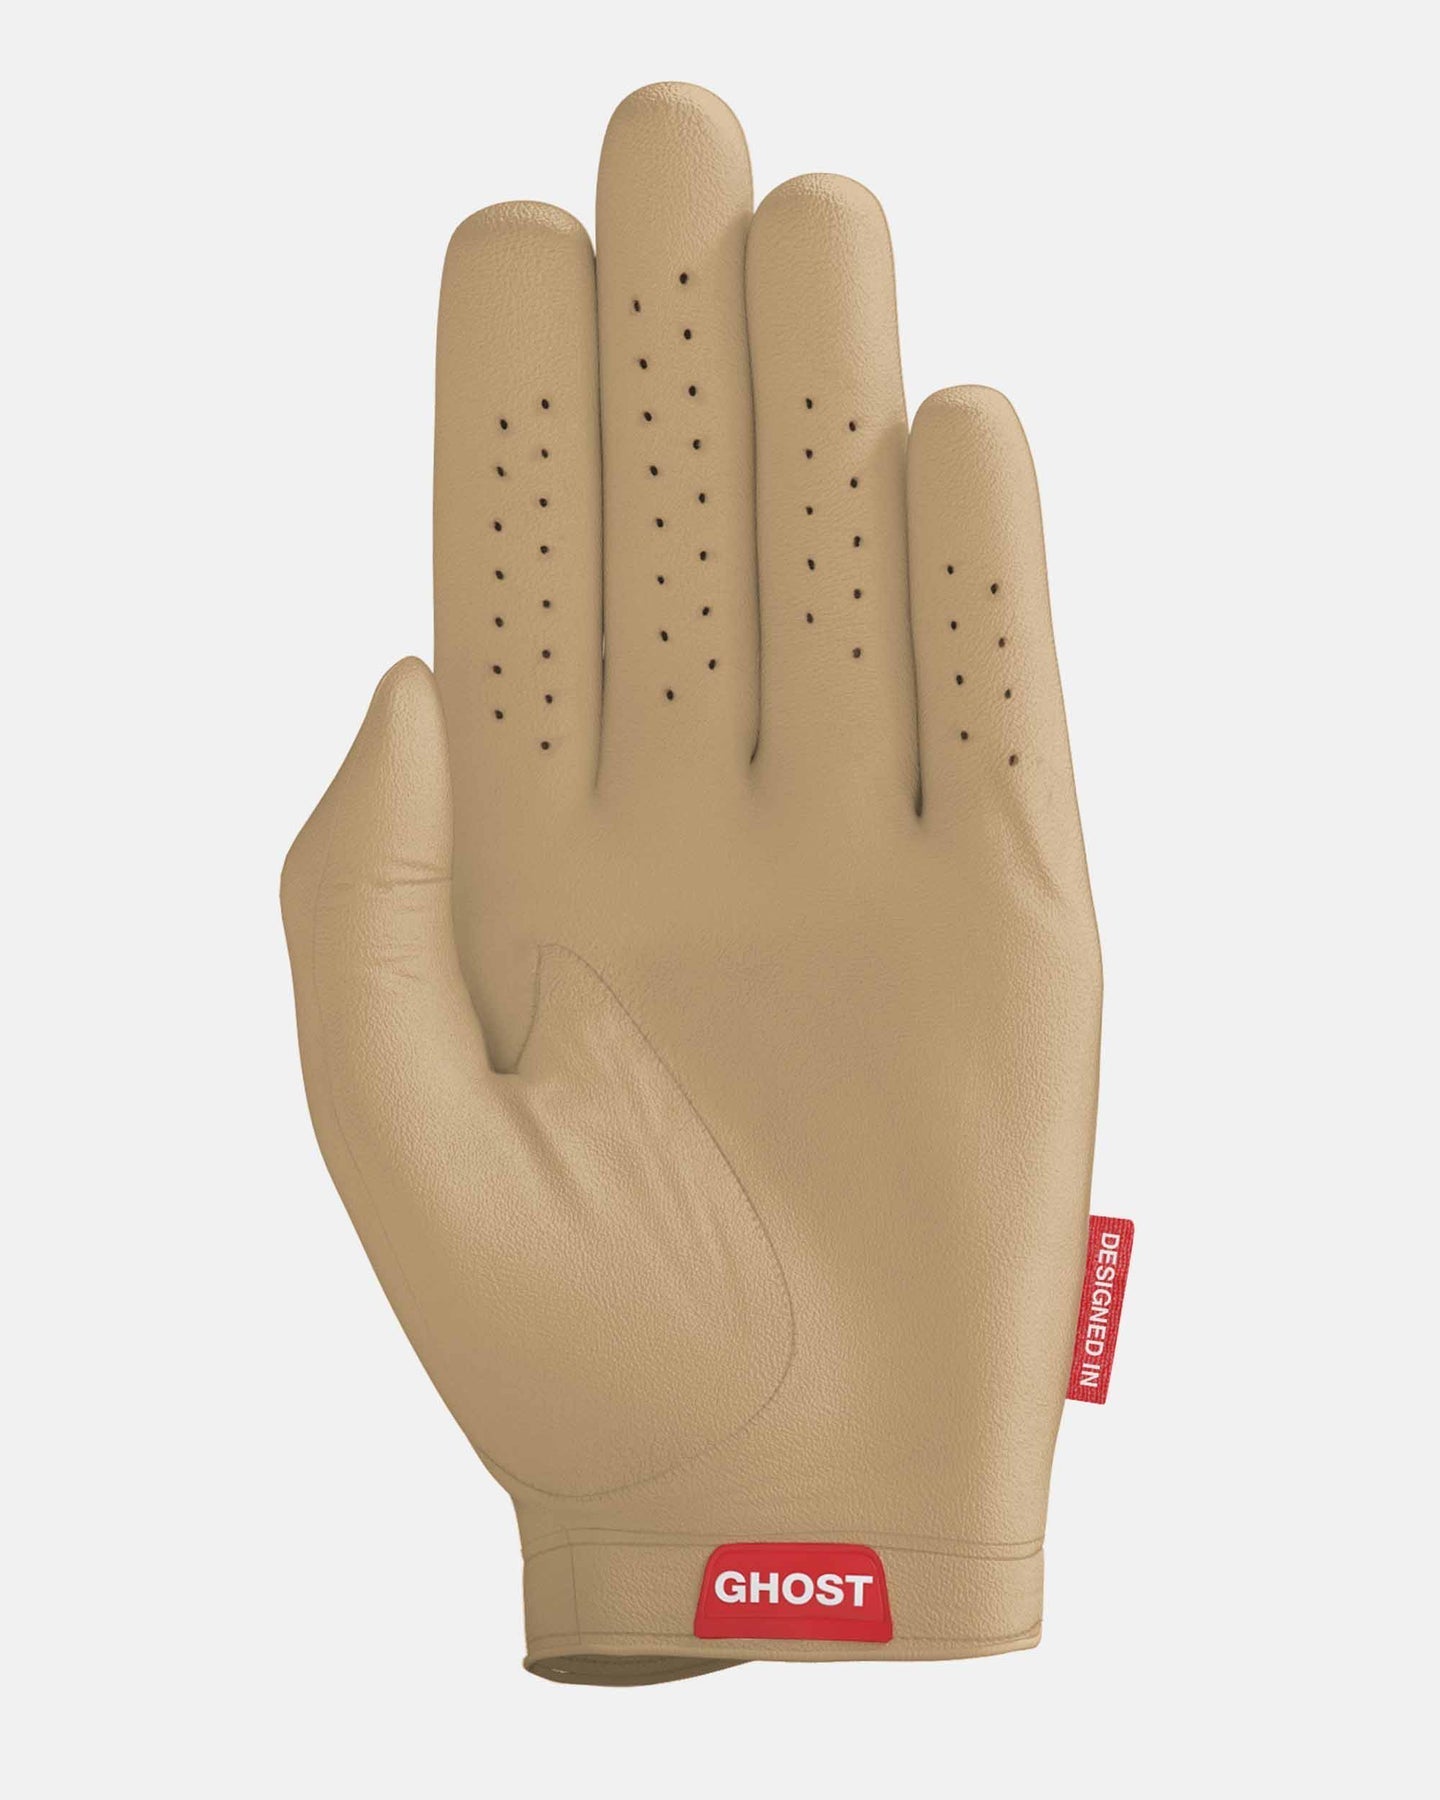 Ghost Right Hand Glove, Desert Camo